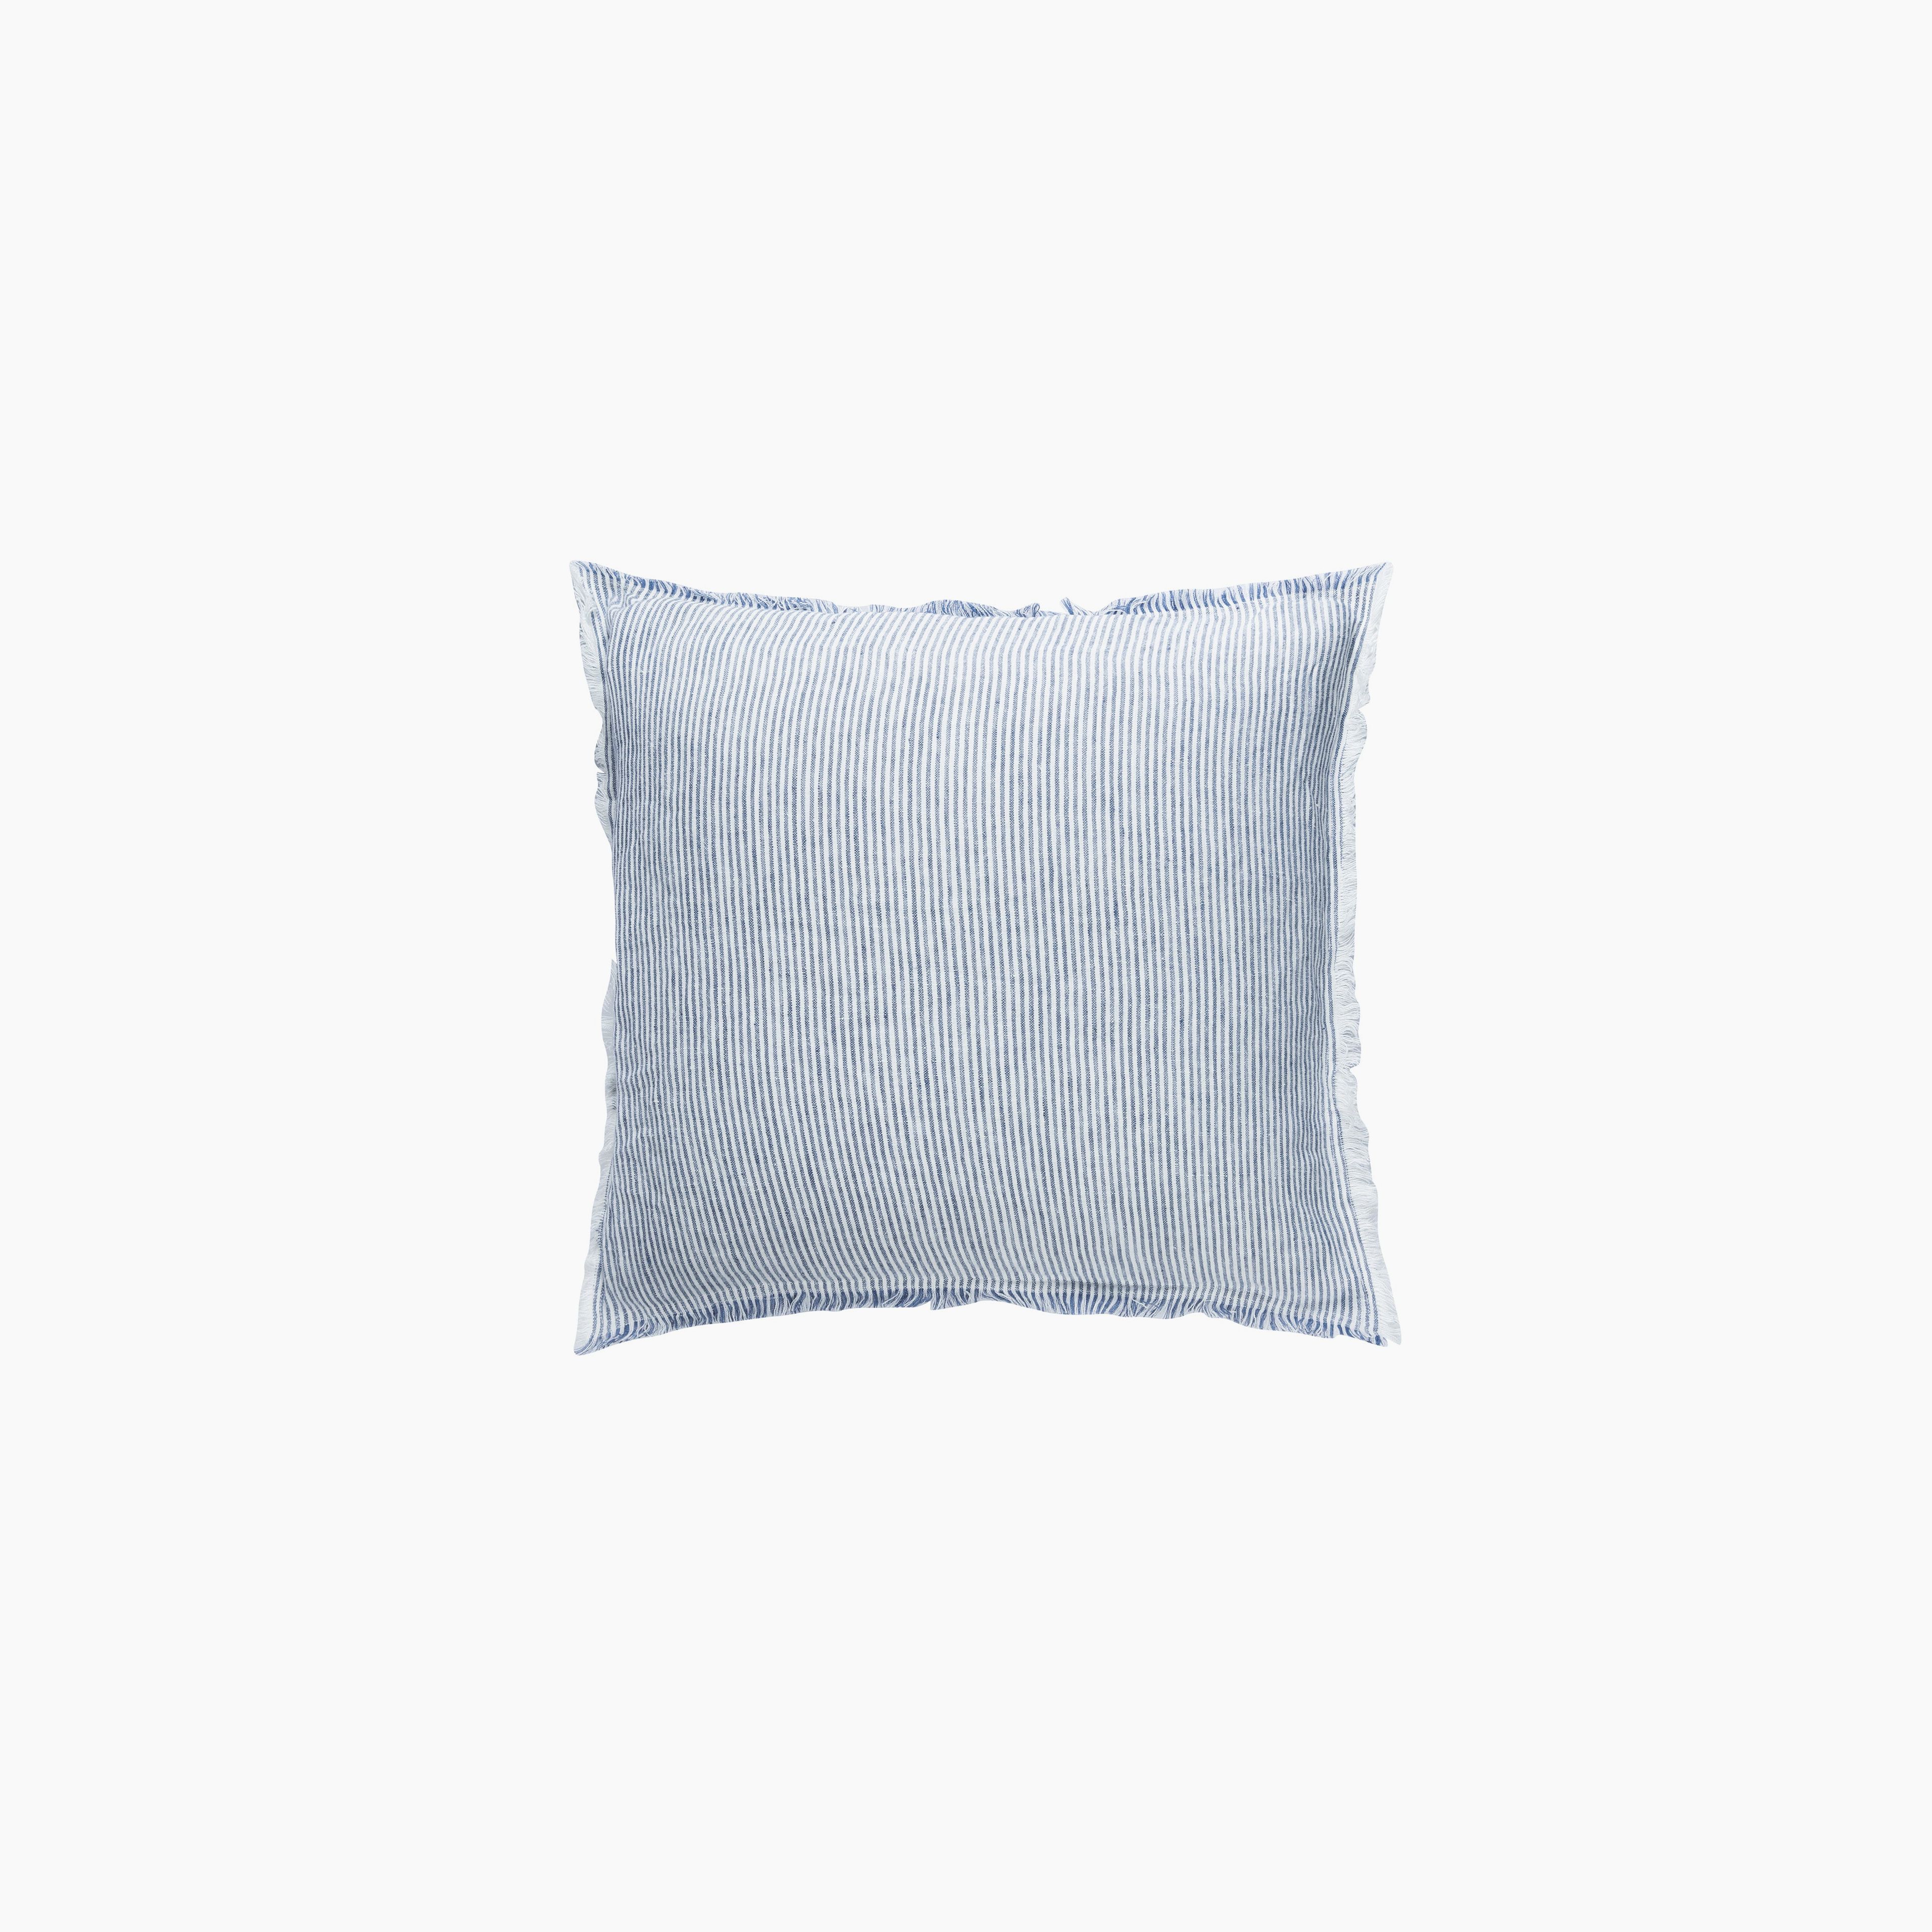 Chambray Blue Pinstripe So Soft Linen Pillow